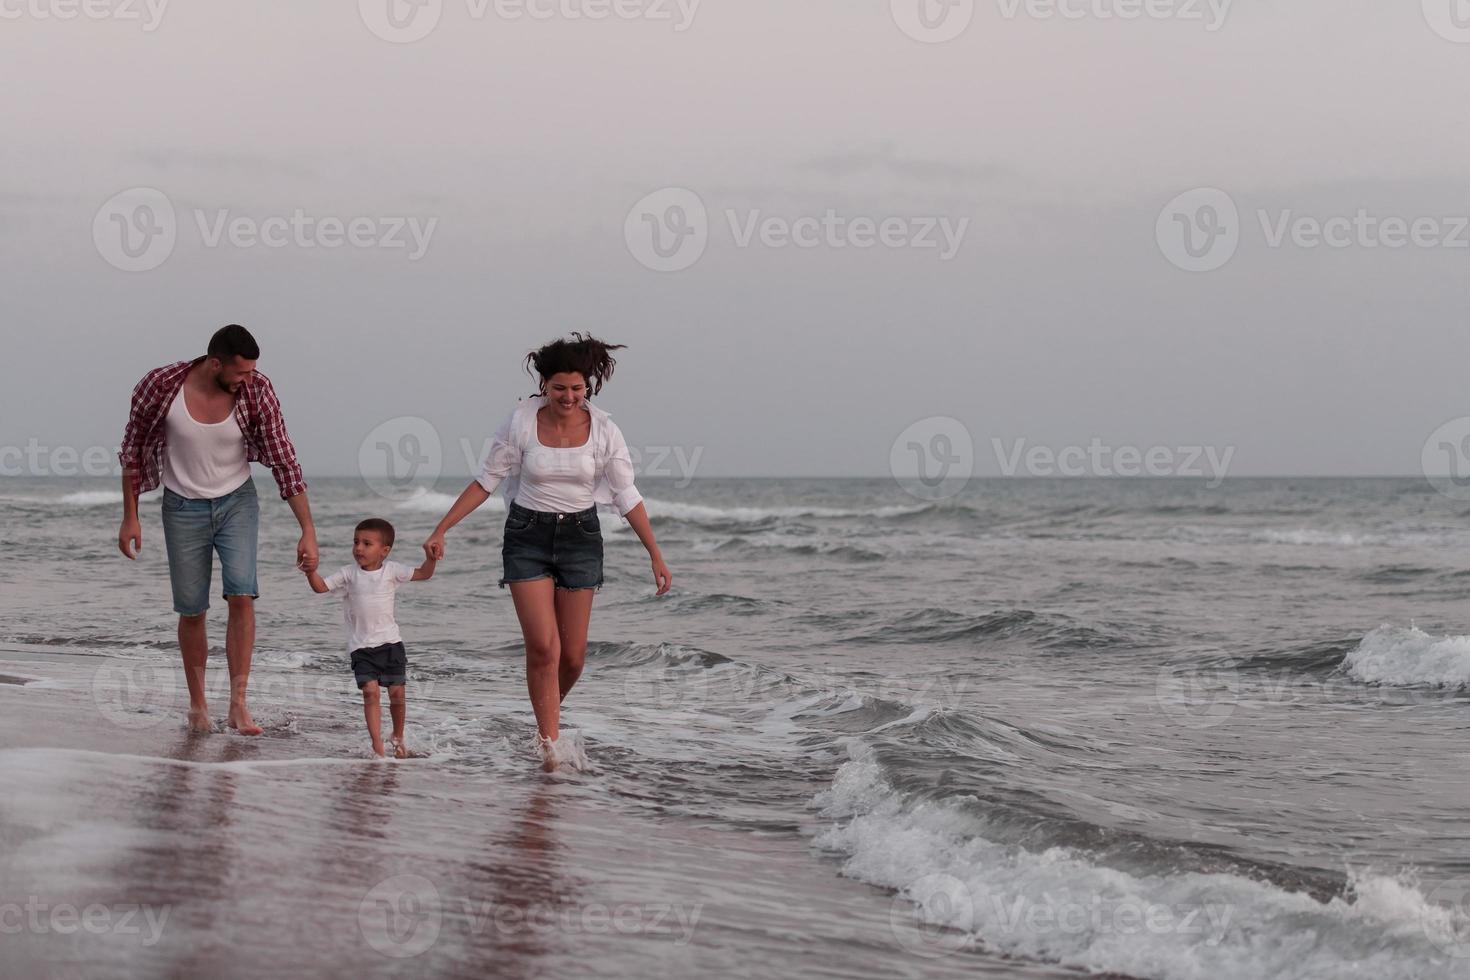 The family enjoys their vacation as they walk the sandy beach with their son. Selective focus photo